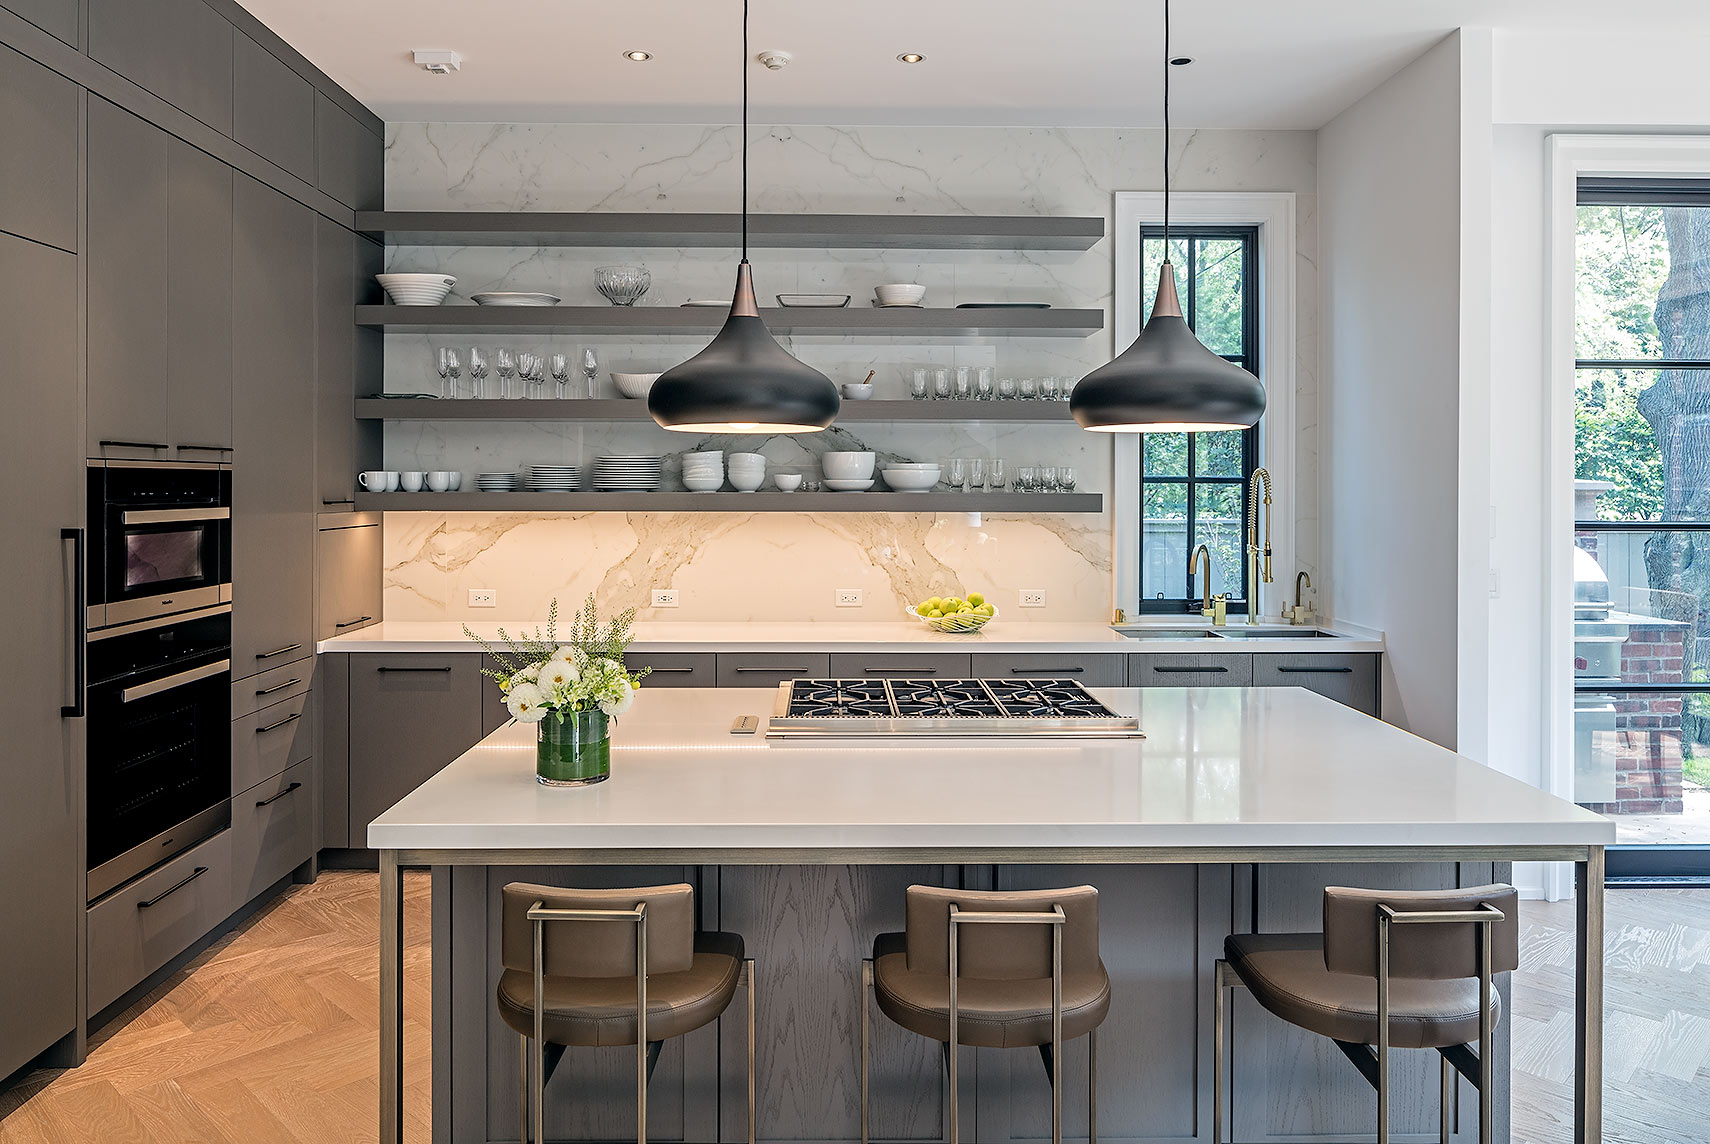 7-interiordesign-transtitional-MakowArchitects-033-kitchen